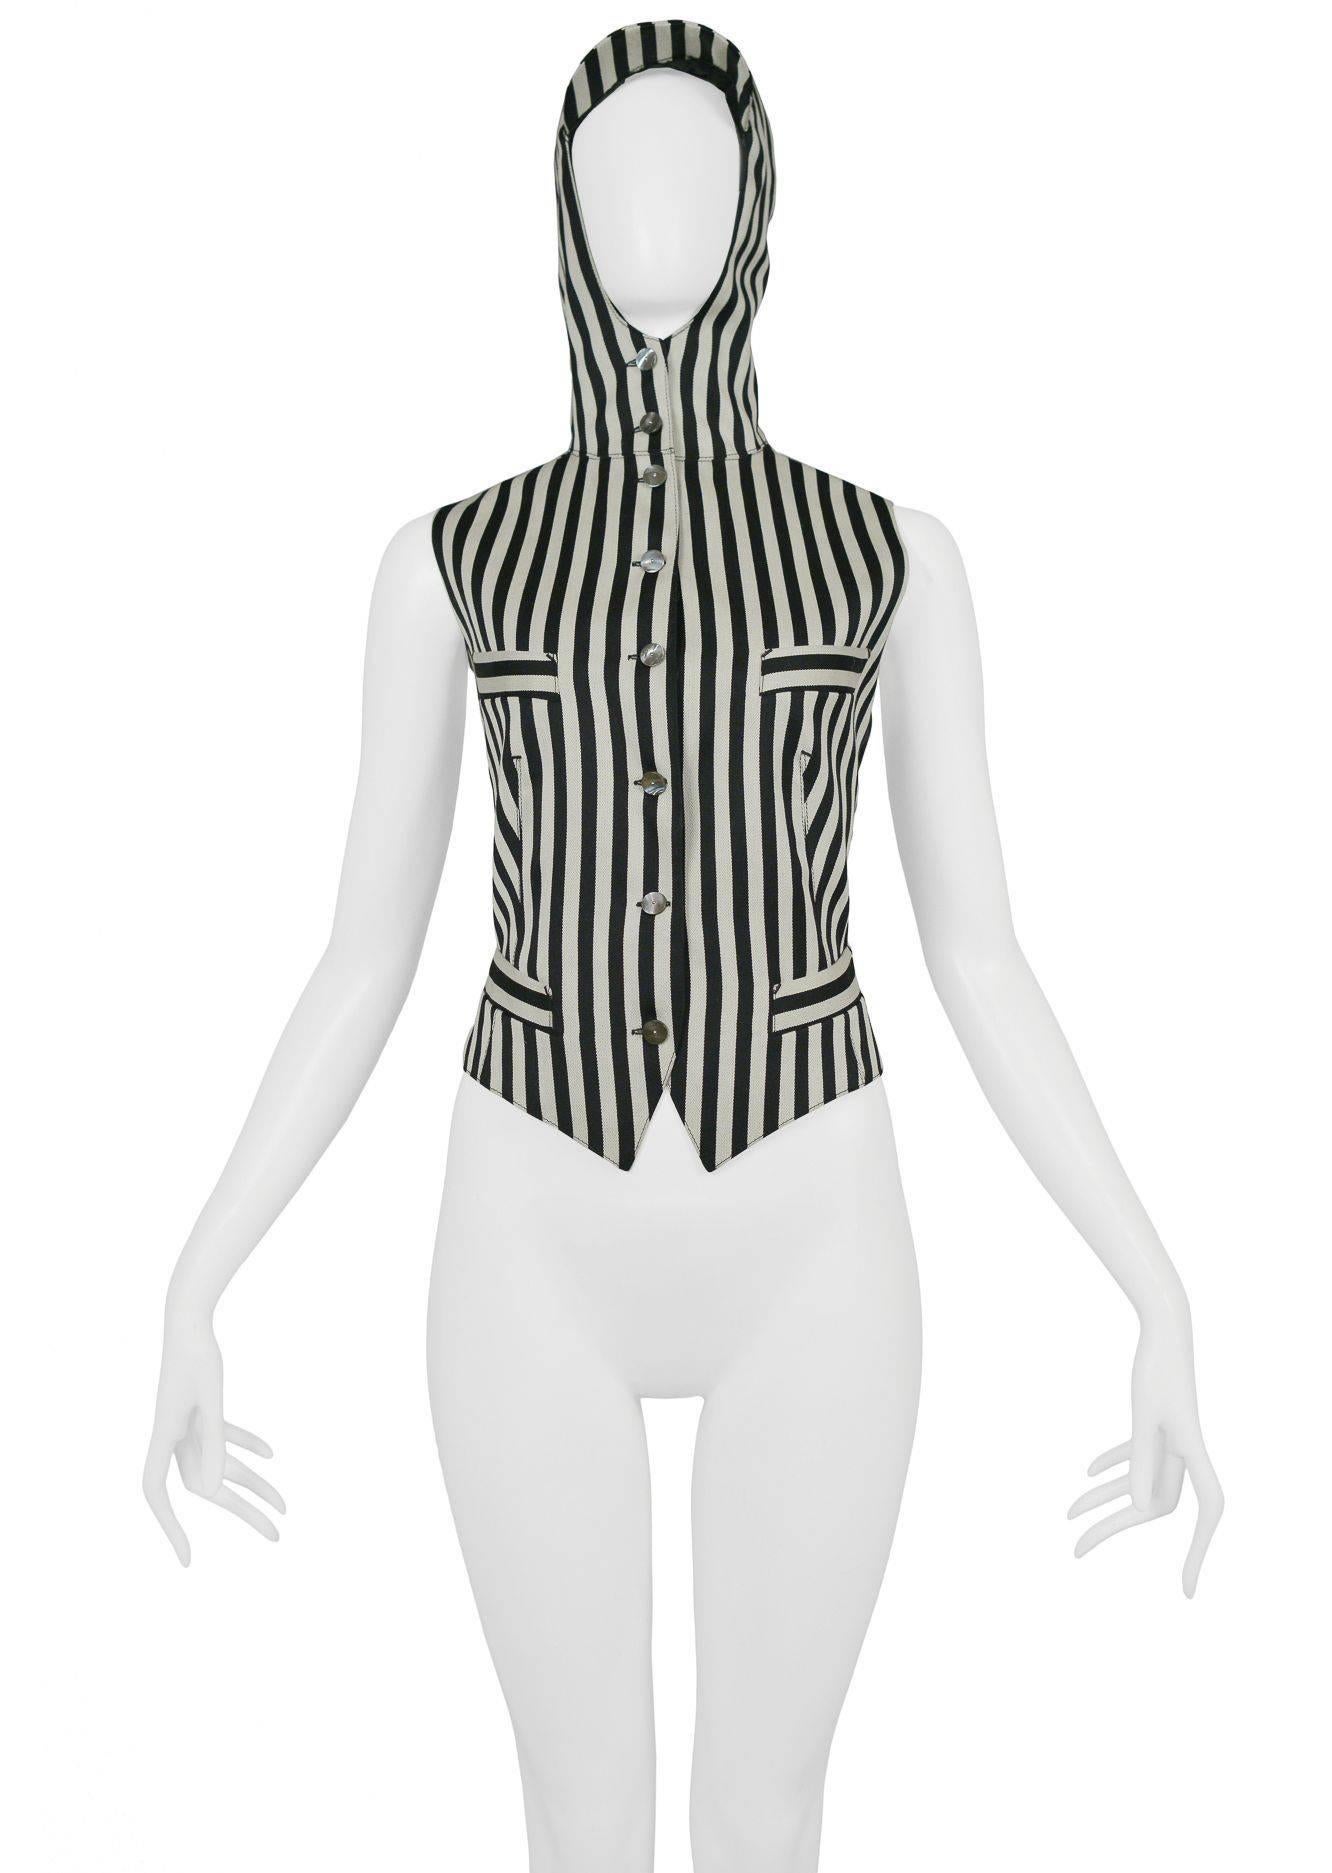 Vintage Jean Paul Gaultier black & white stripe vest with hood and brim. Collection 1991.

Excellent Vintage Condition.

Size: 42